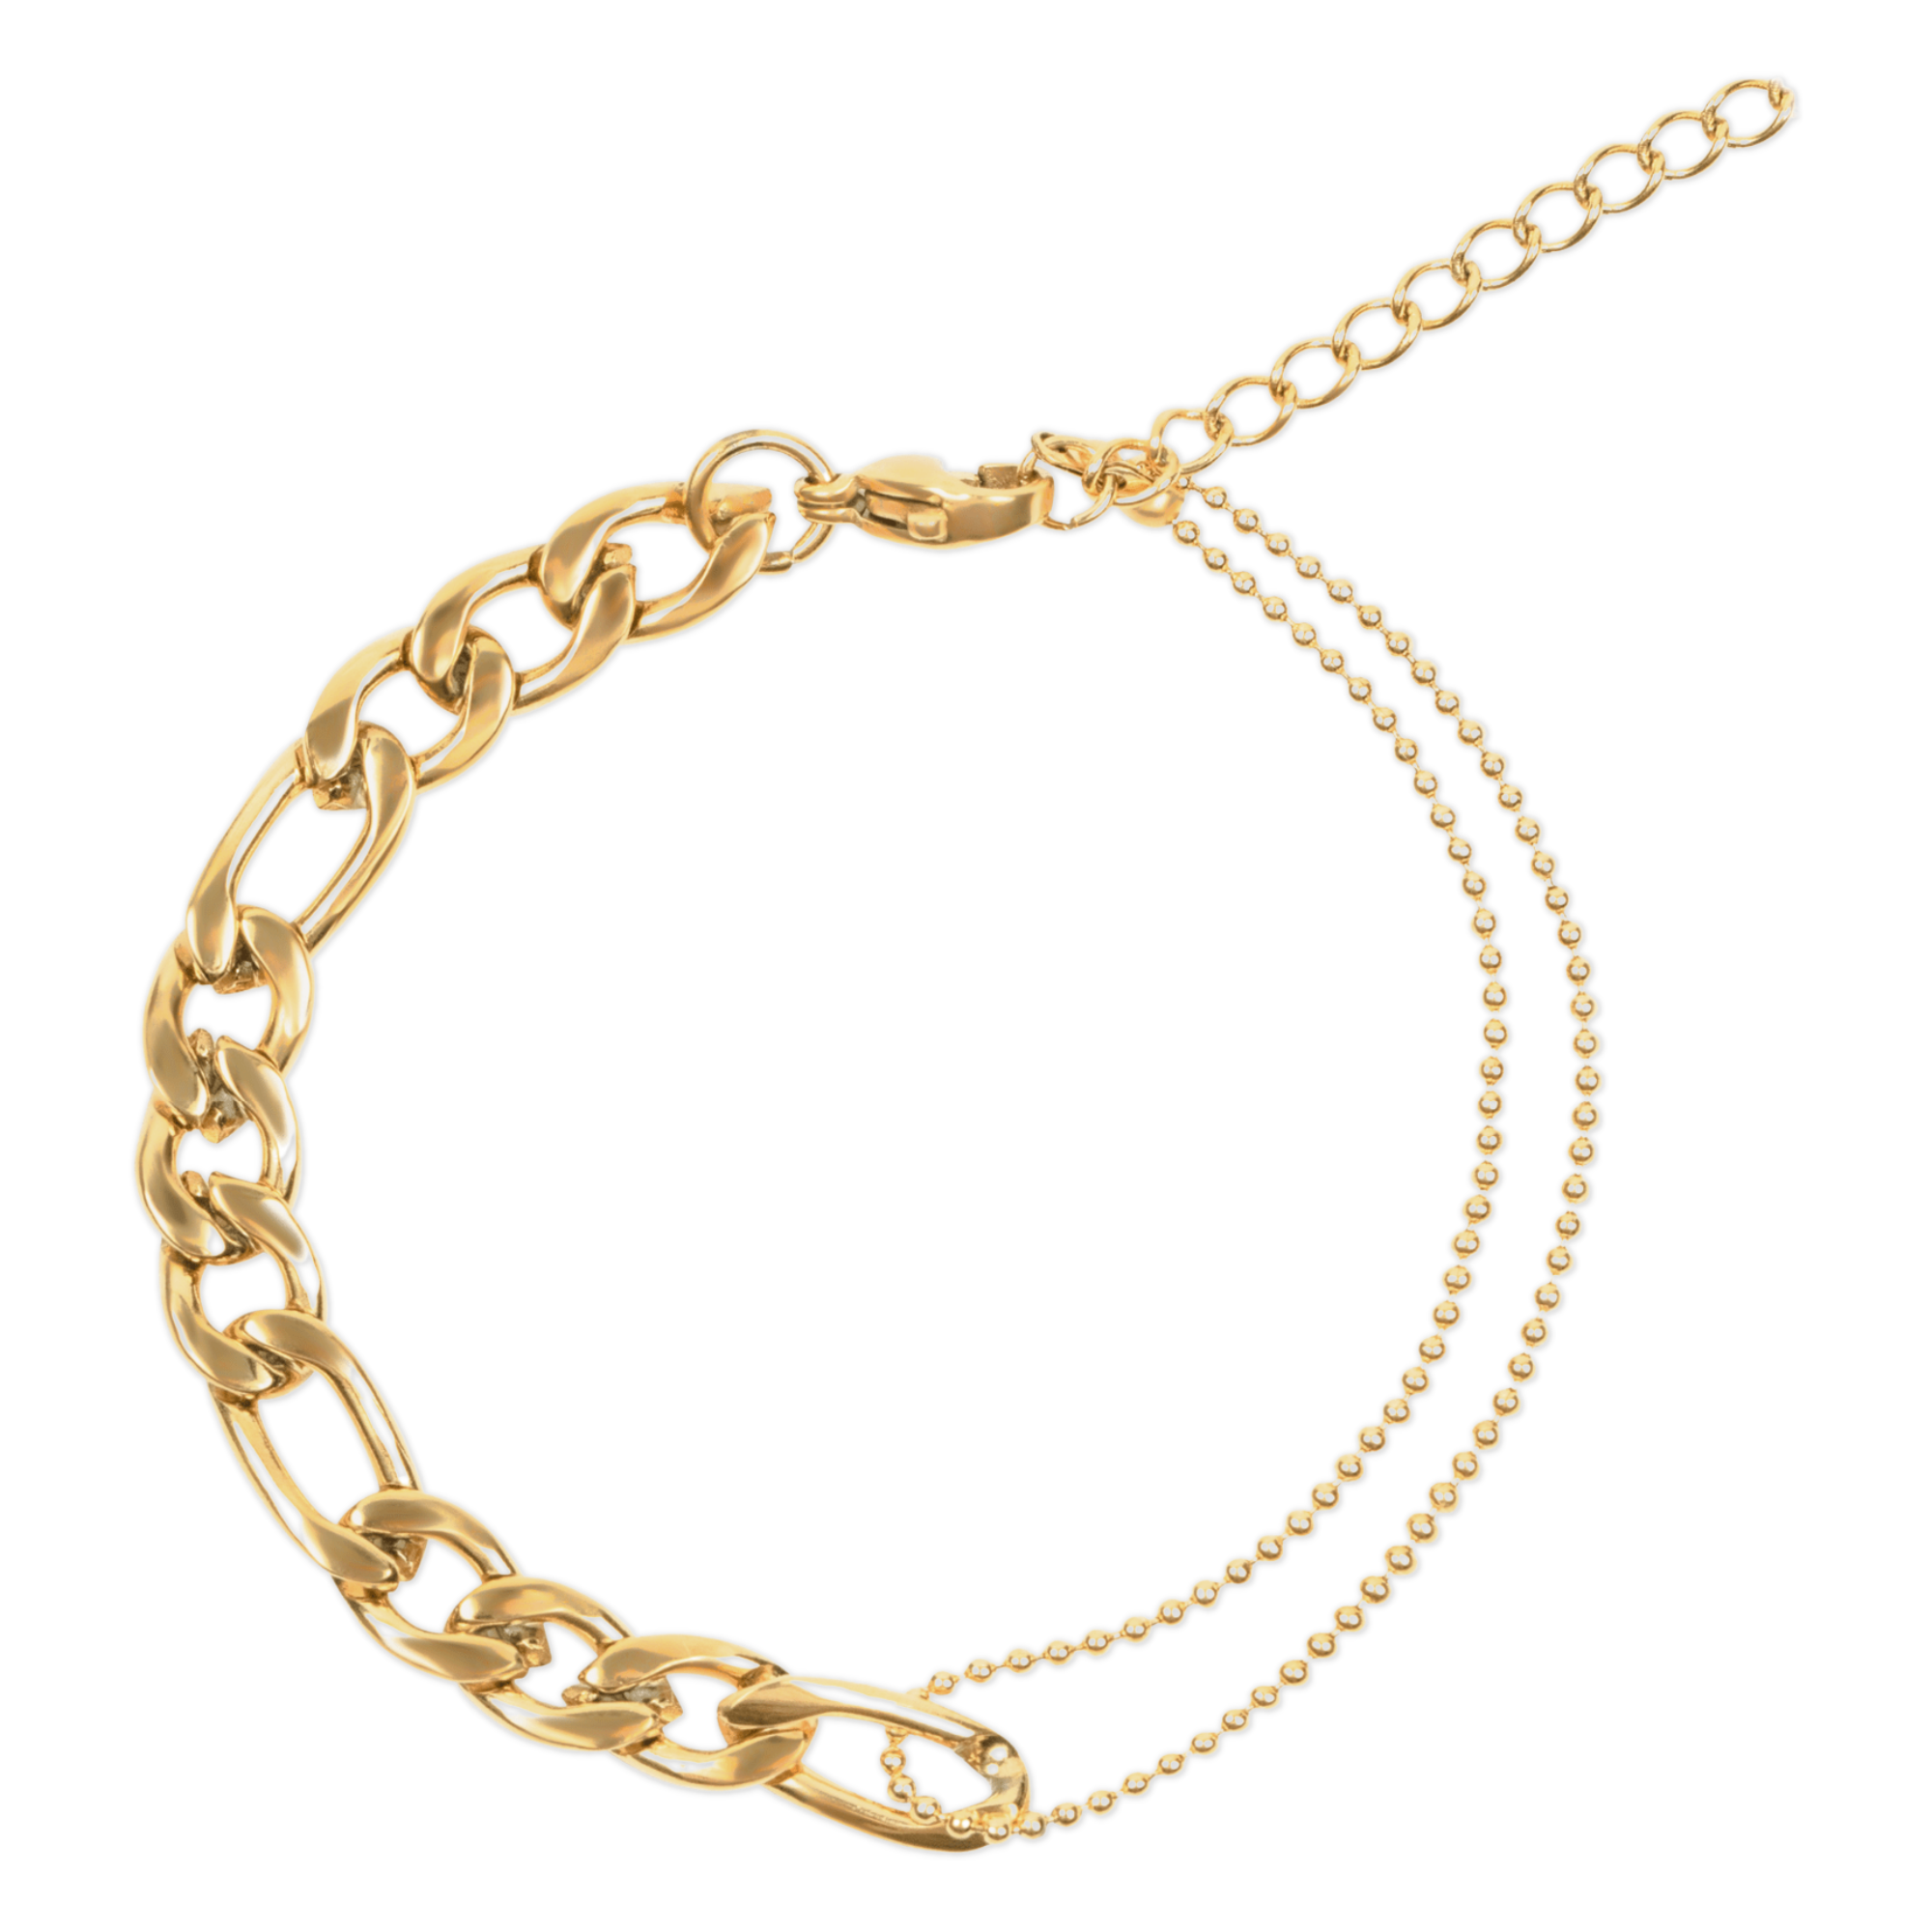 Champs Elysées Bracelet Other - Fashion Jewelry M1058Z